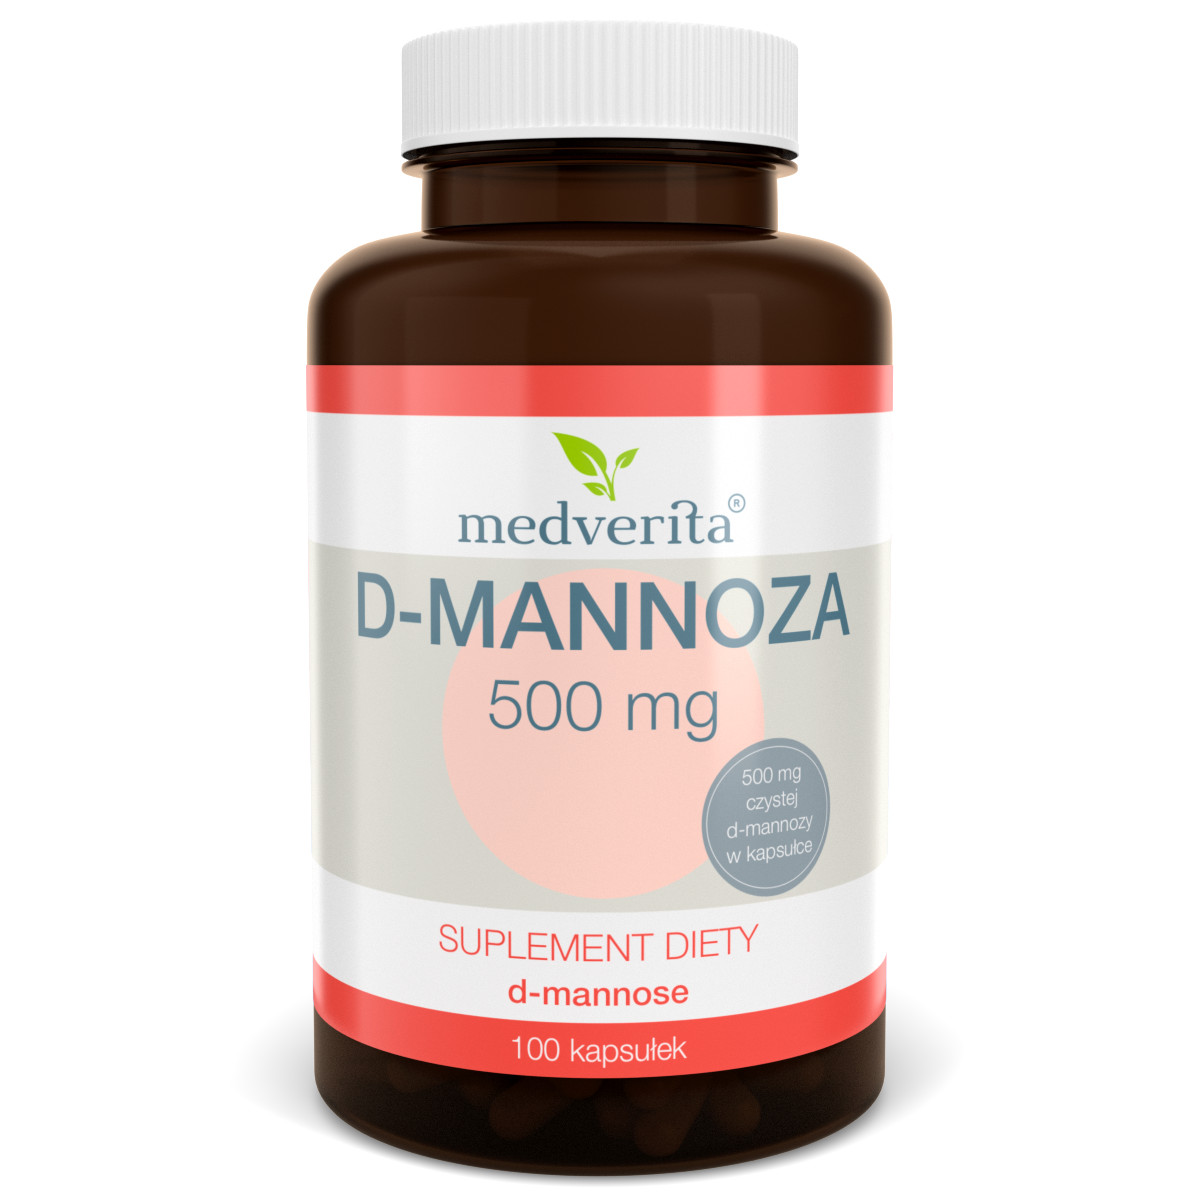 D-MANNOZA 500 mg - 100 kapsułek | układ moczowy